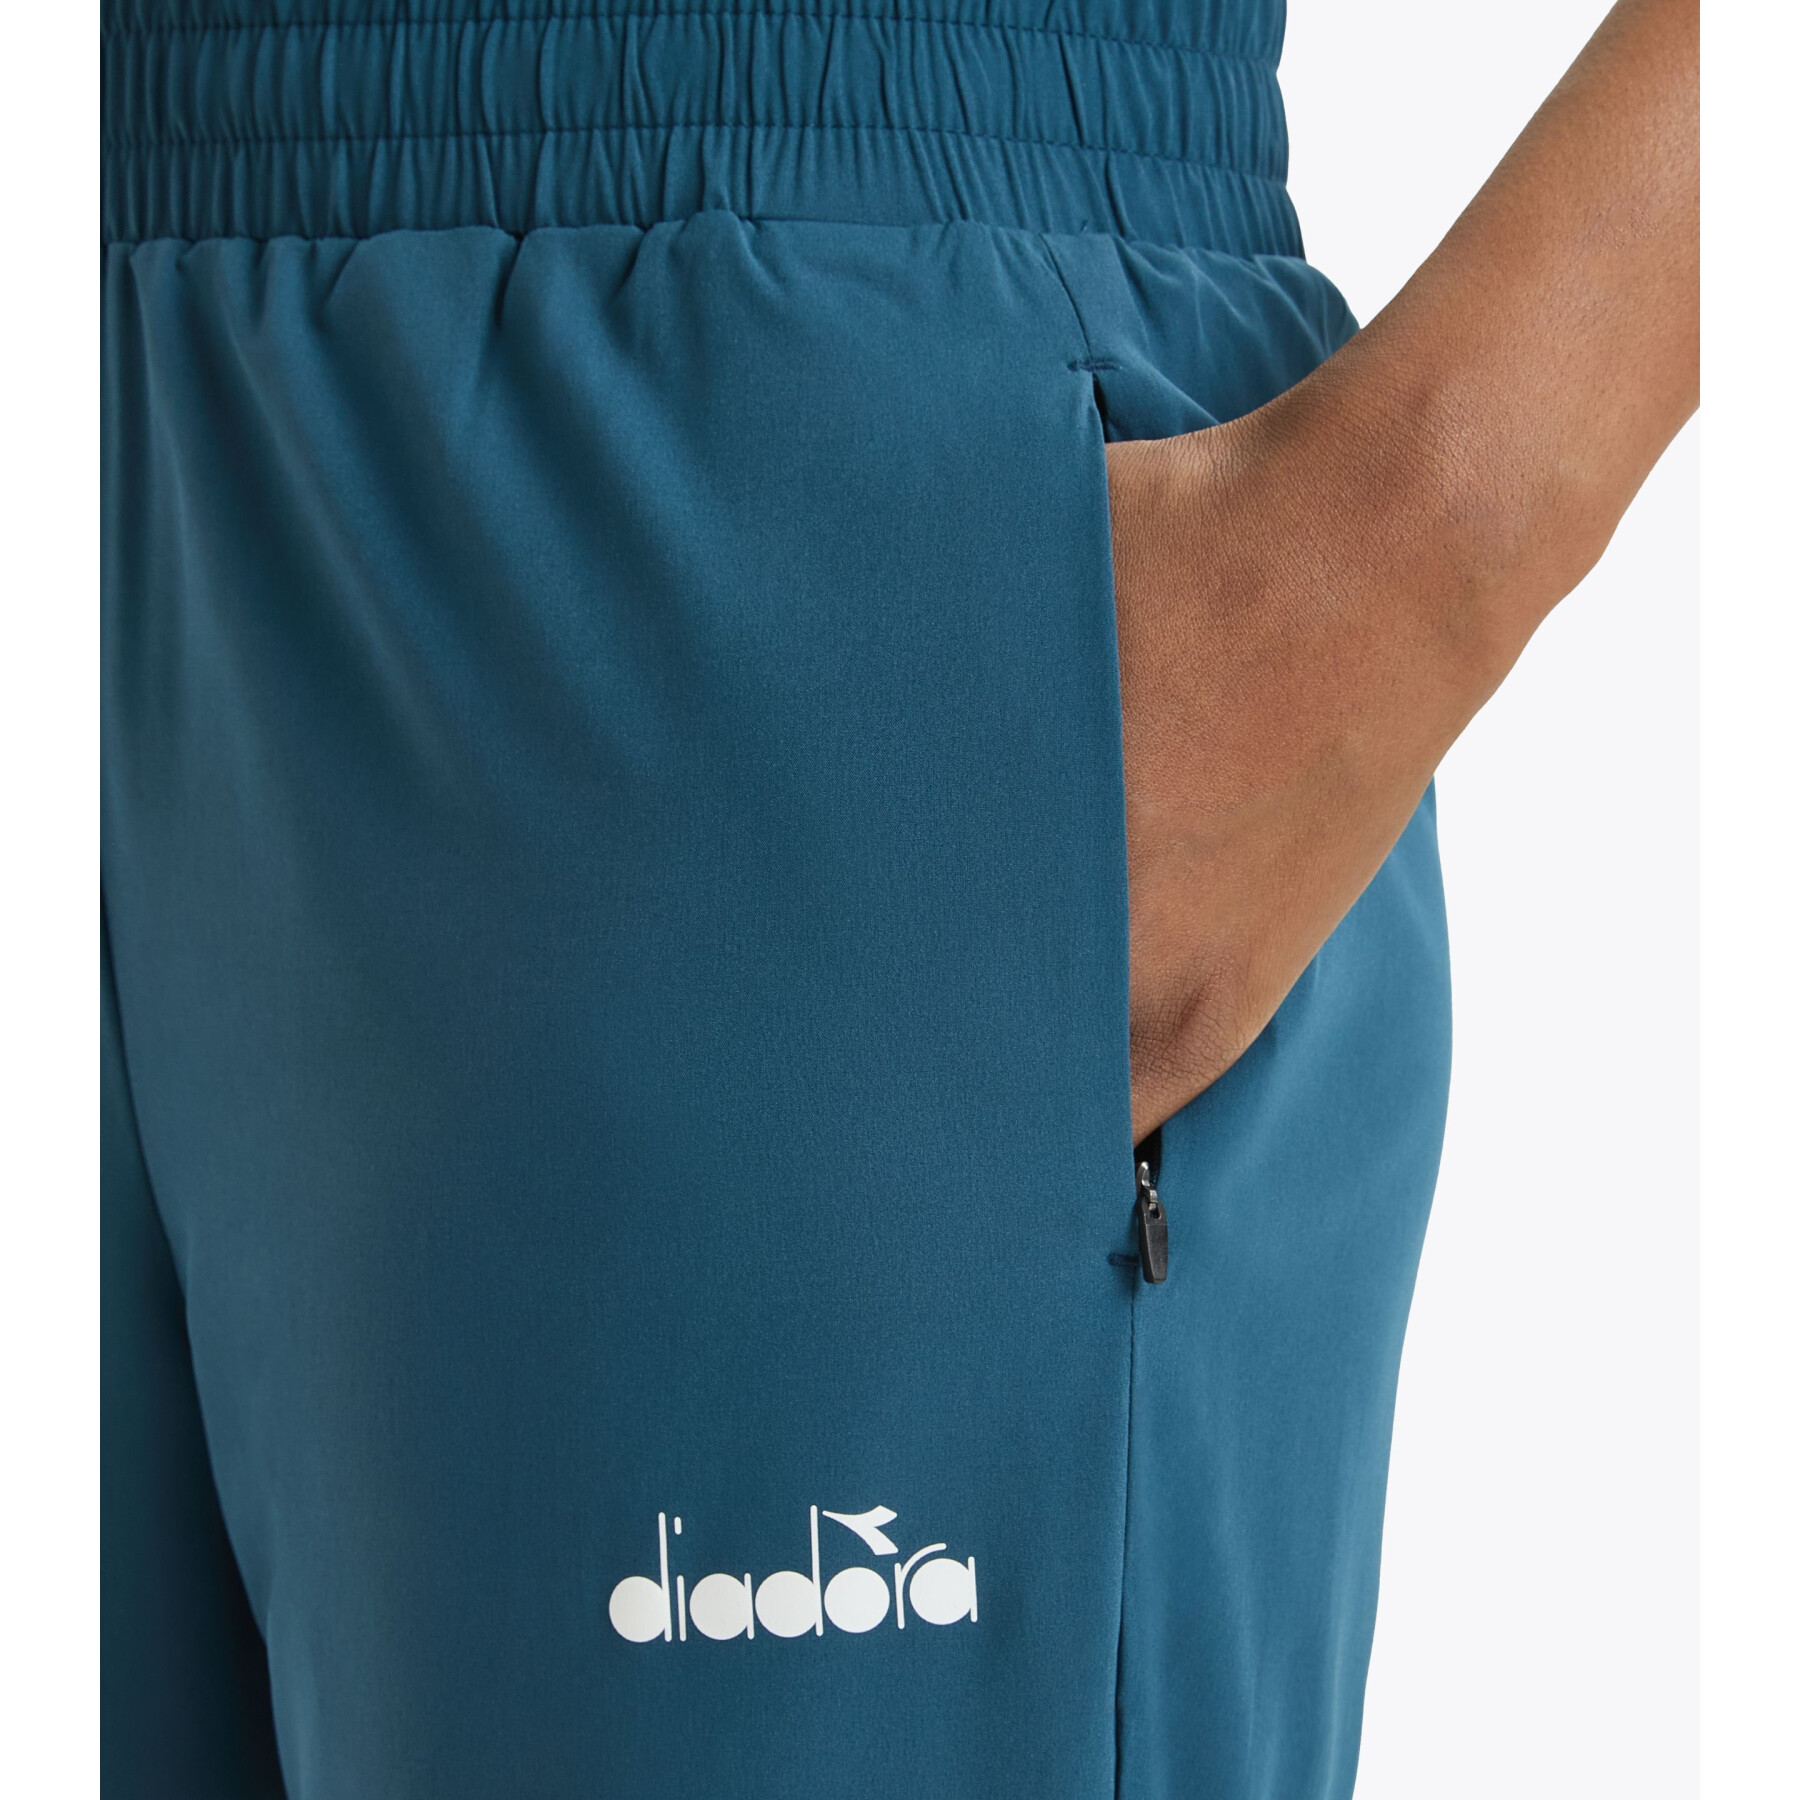 Women's pants Diadora Icon